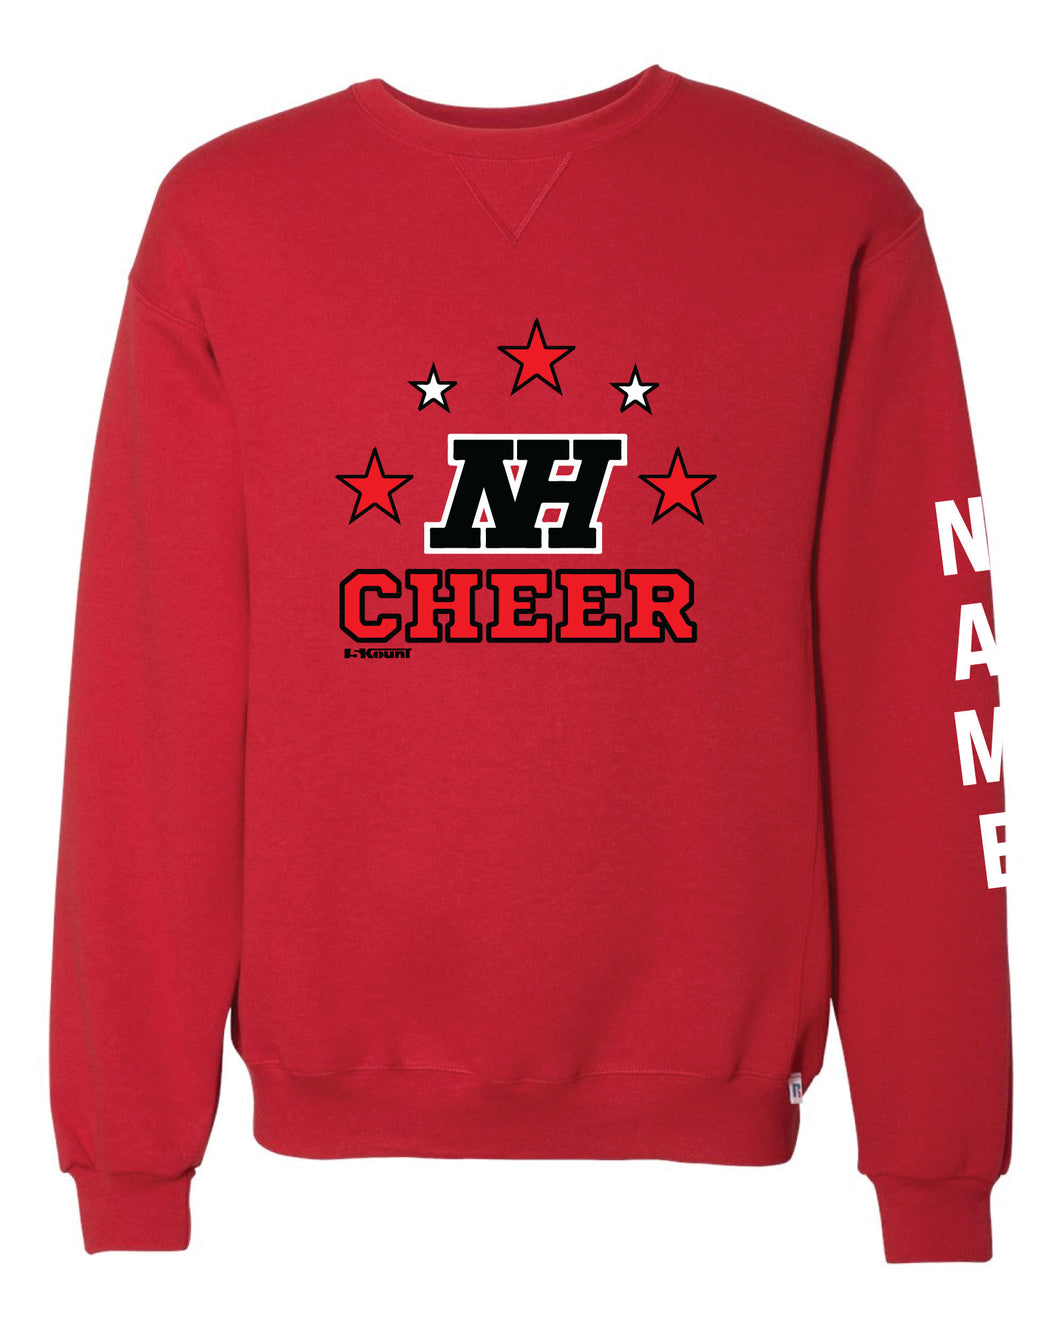 Highlands Cheer Russell Athletic Cotton Crewneck Sweatshirt Design 1 - Red - 5KounT2018